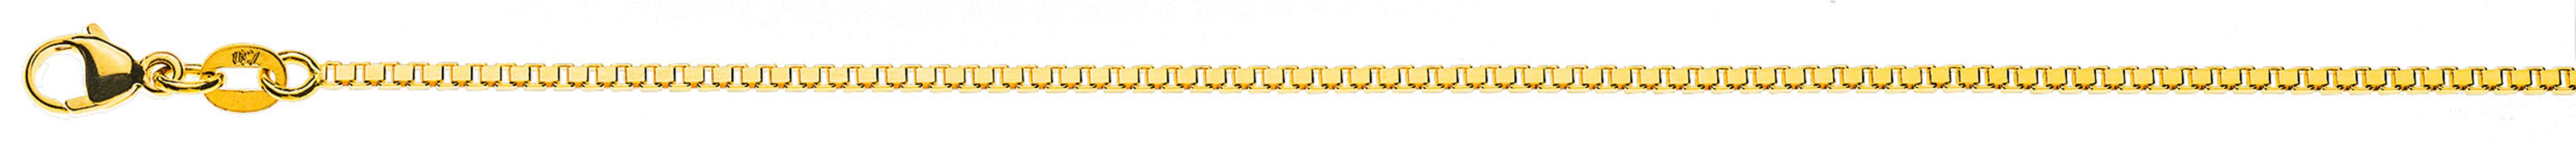 AURONOS Prestige Necklace yellow gold 18K Venetian chain diamond 60cm 1.4mm